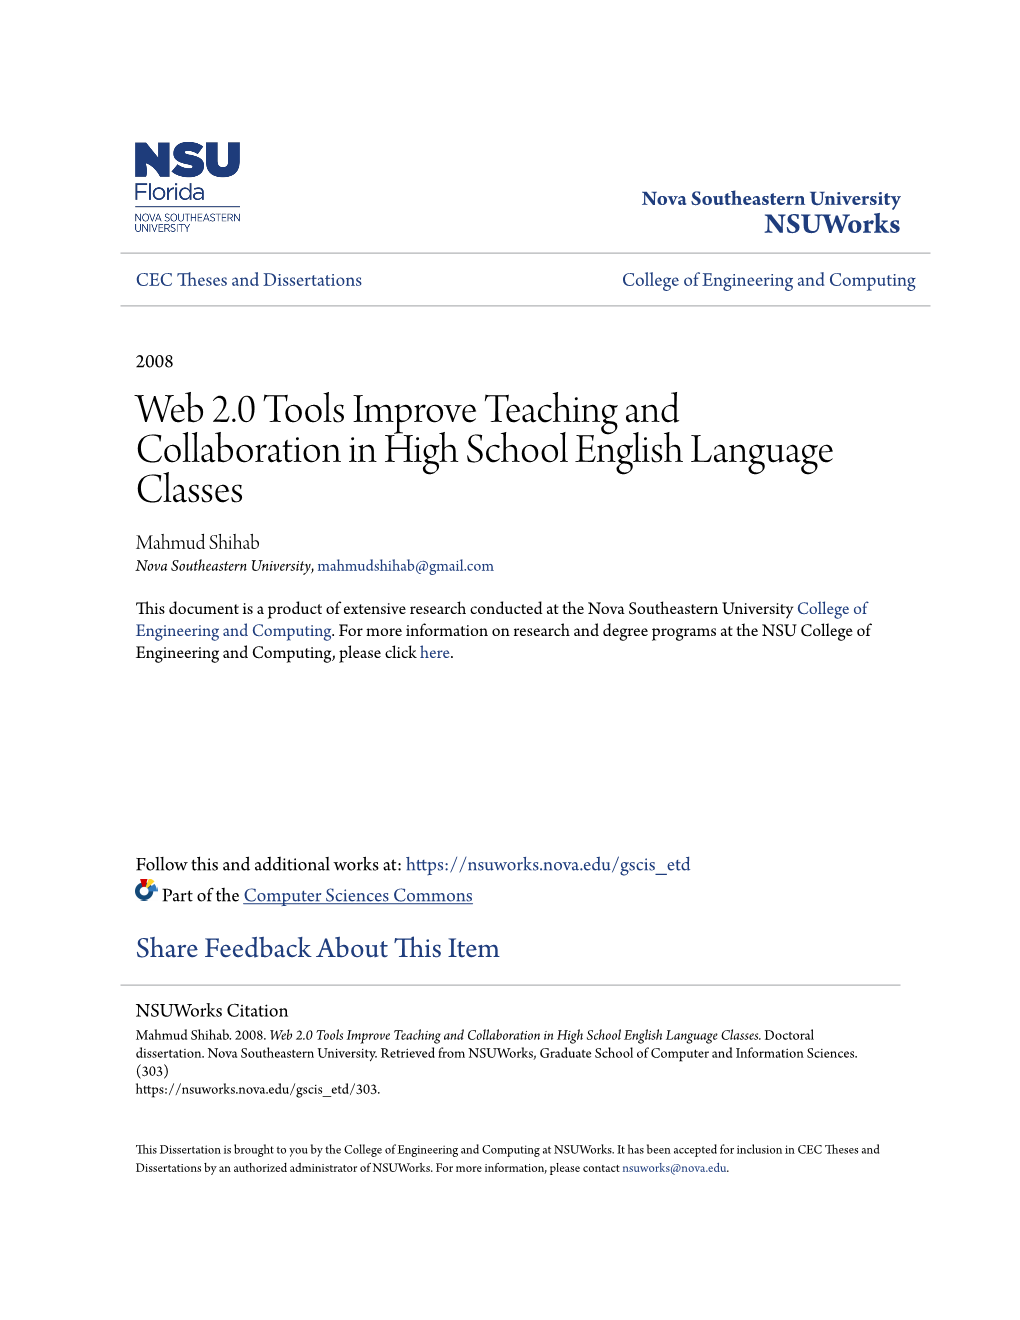 Web 2.0 Tools Improve Teaching and Collaboration in High School English Language Classes Mahmud Shihab Nova Southeastern University, Mahmudshihab@Gmail.Com